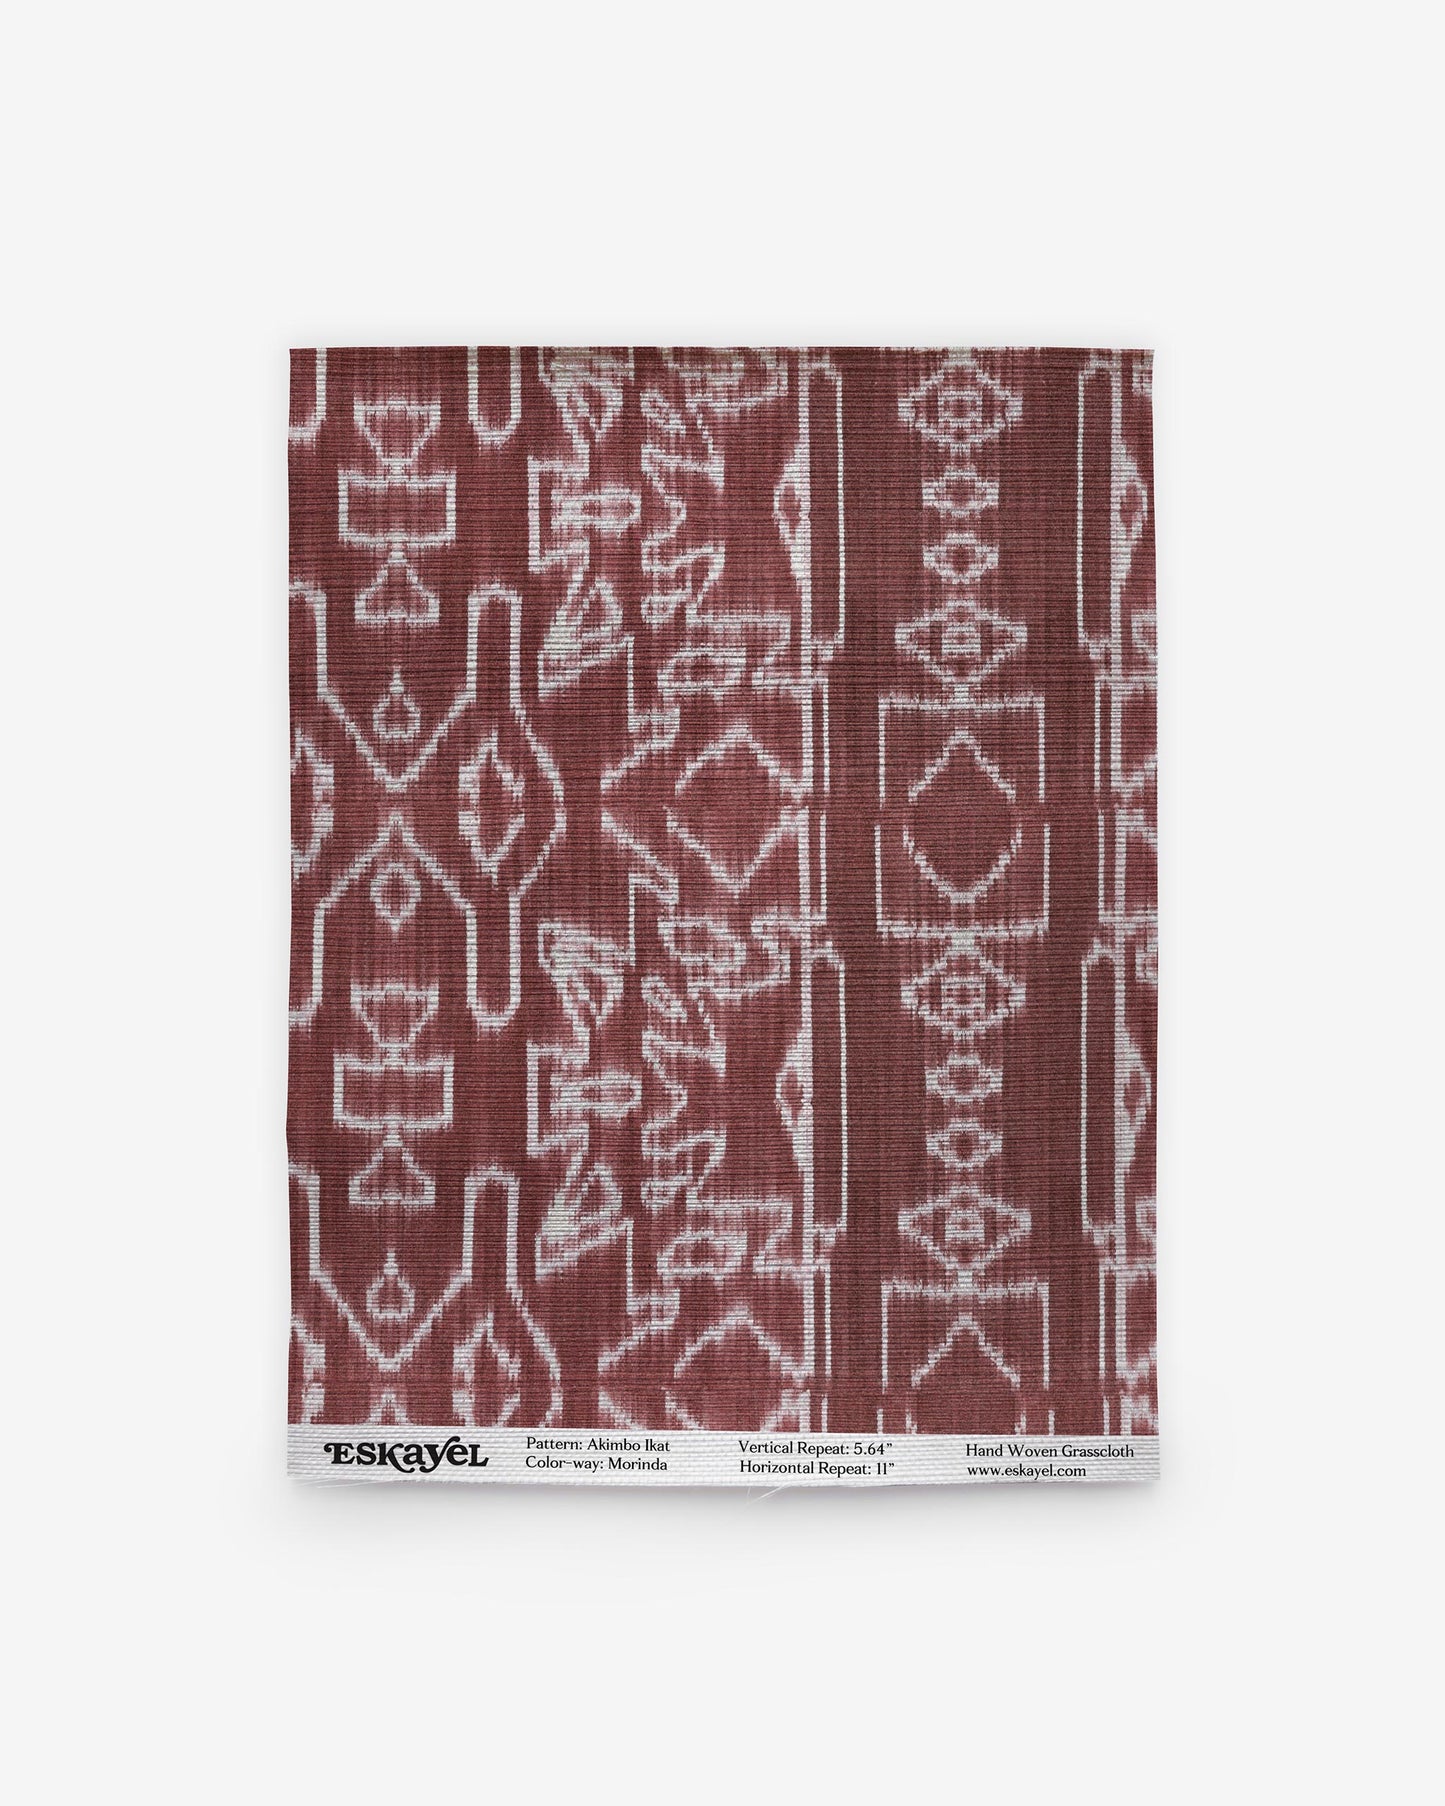 A burgundy and white Akimbo Grasscloth Morinda Ikat pattern on a napkin